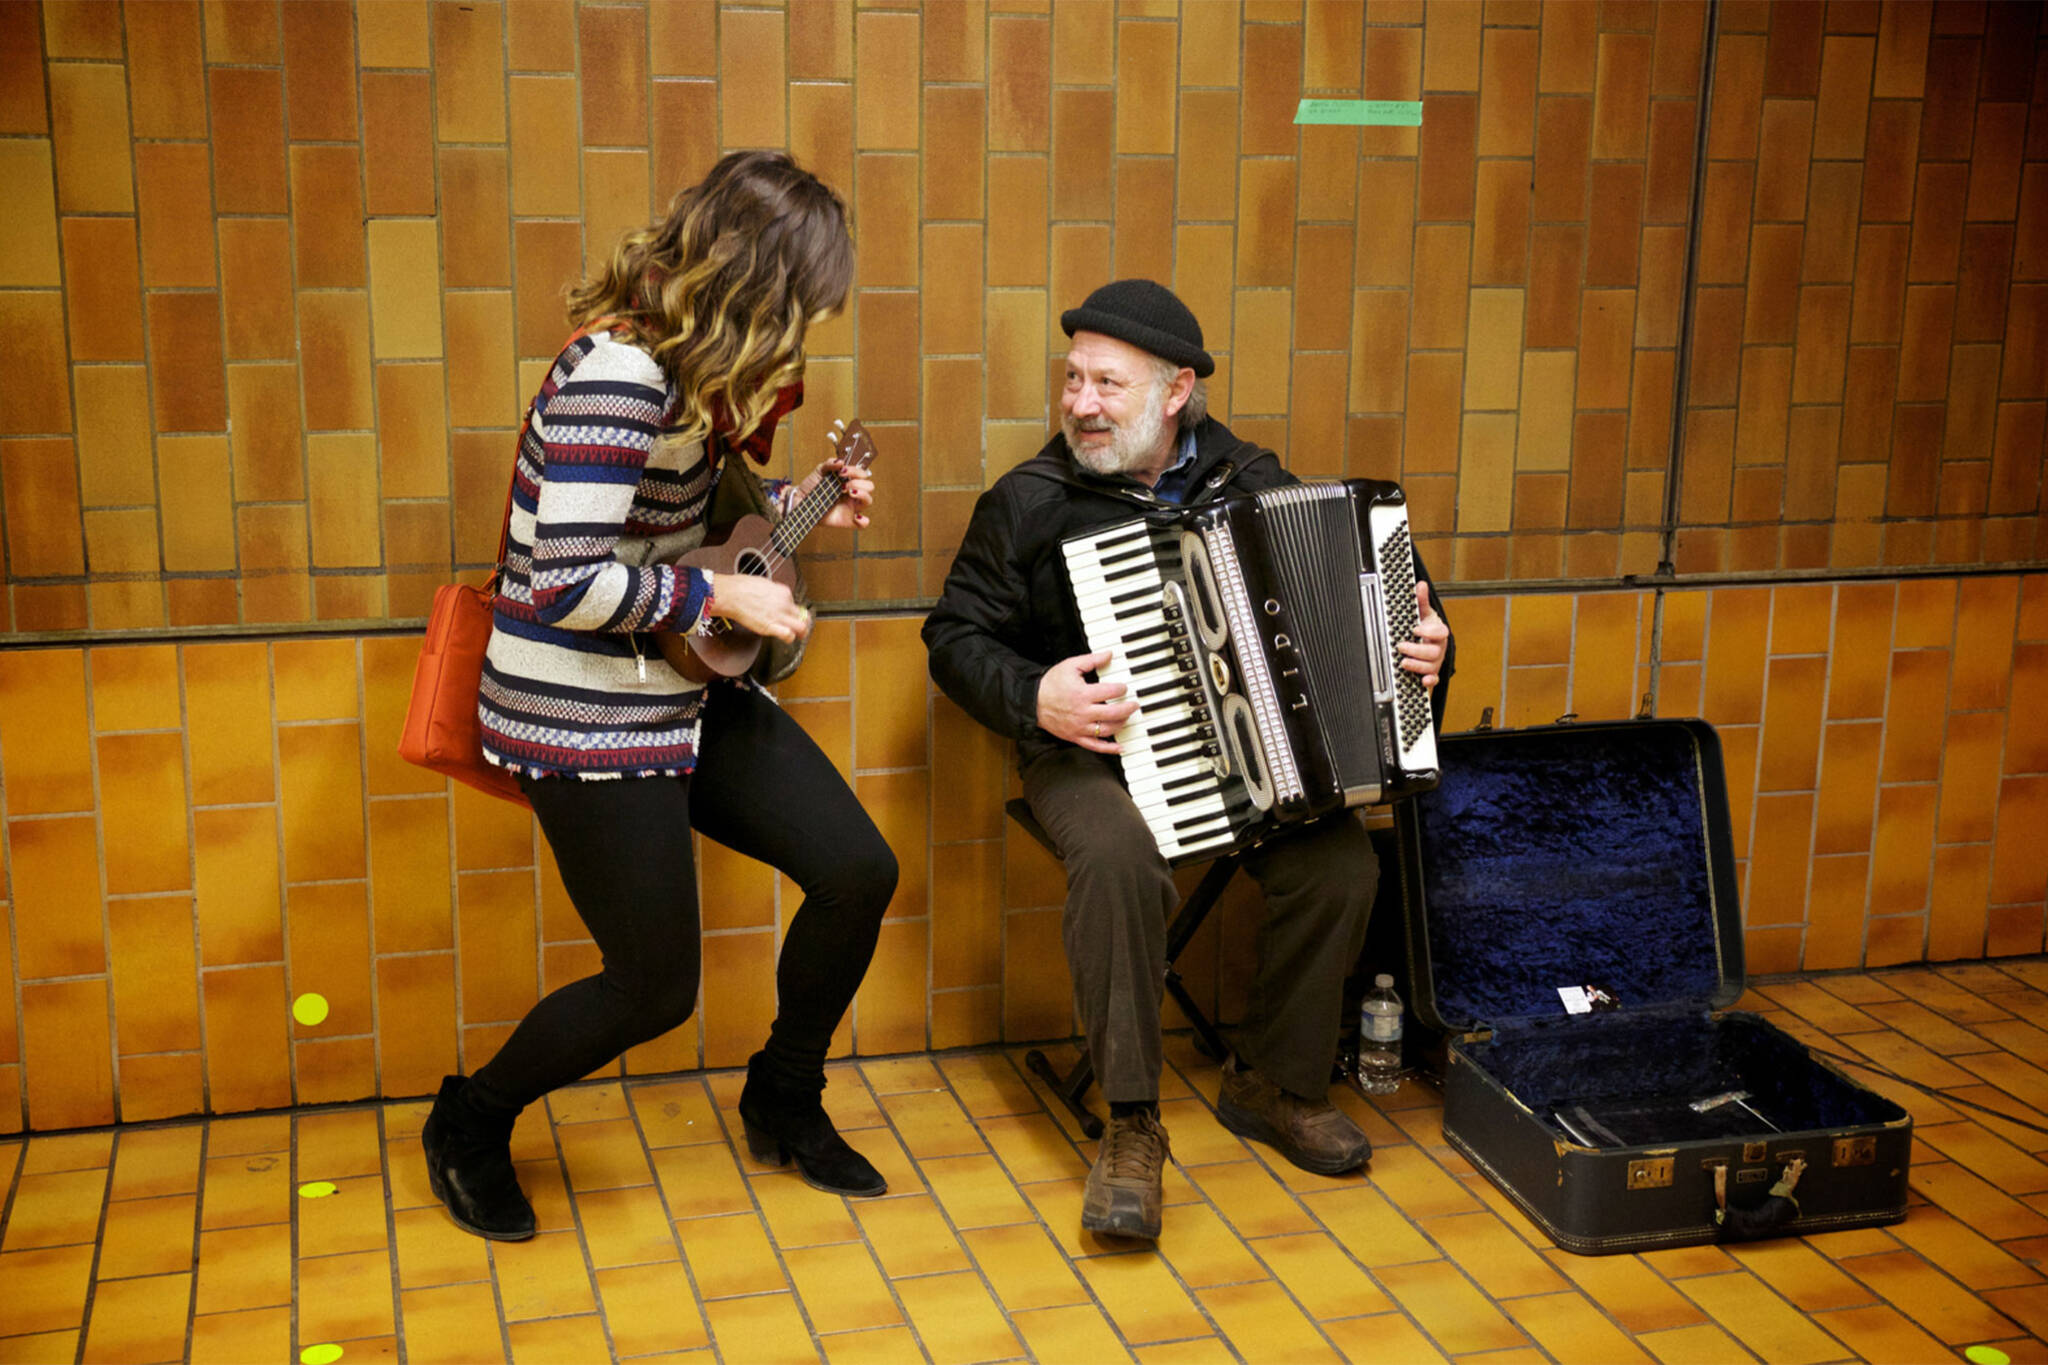 TTC subway musicians